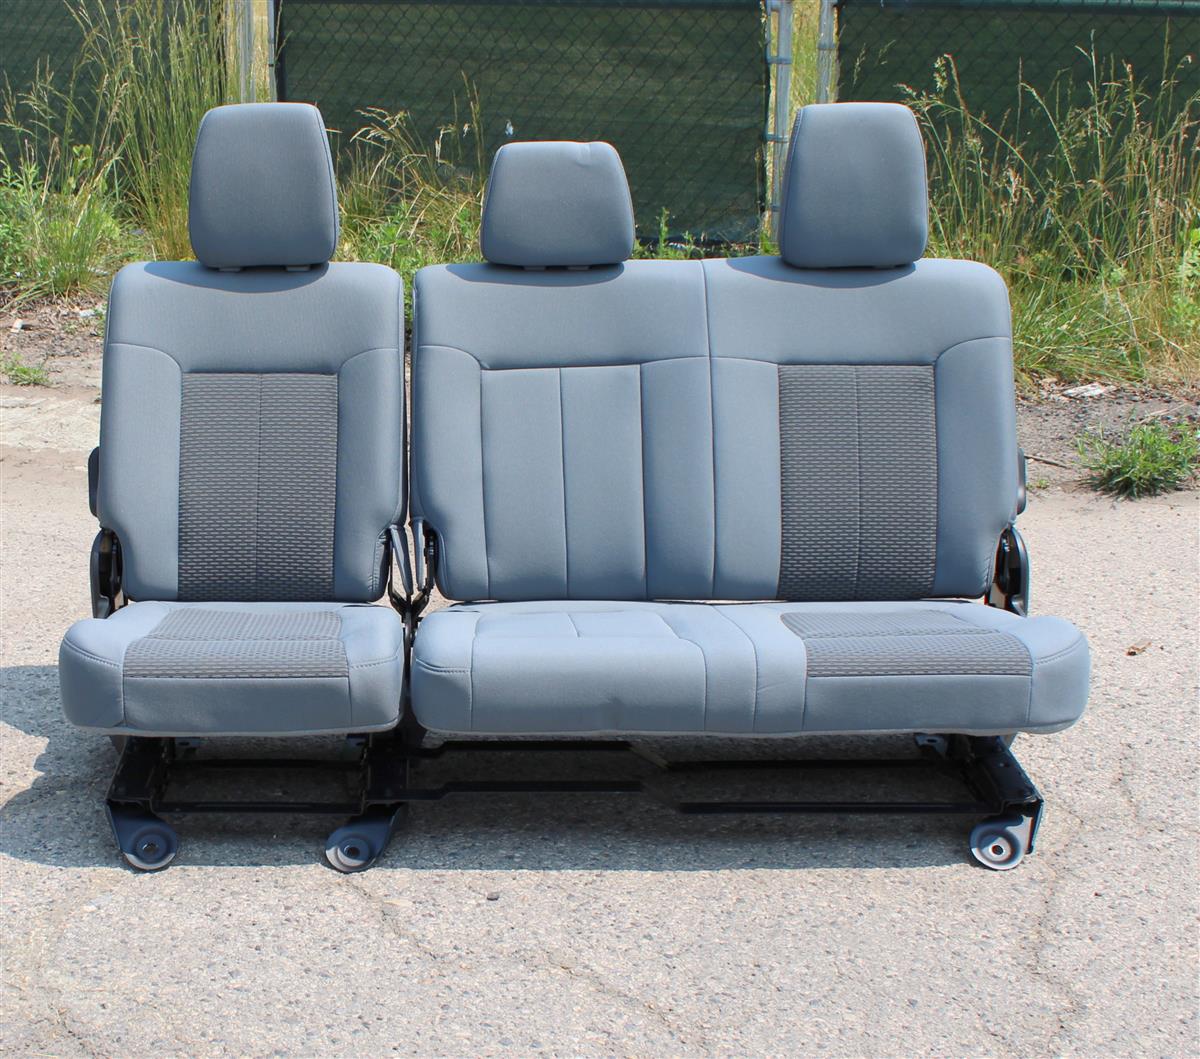 SP-2994 | _SP-2994 6040 Split Fold Down Vehicle Bench Seats  (17).JPG